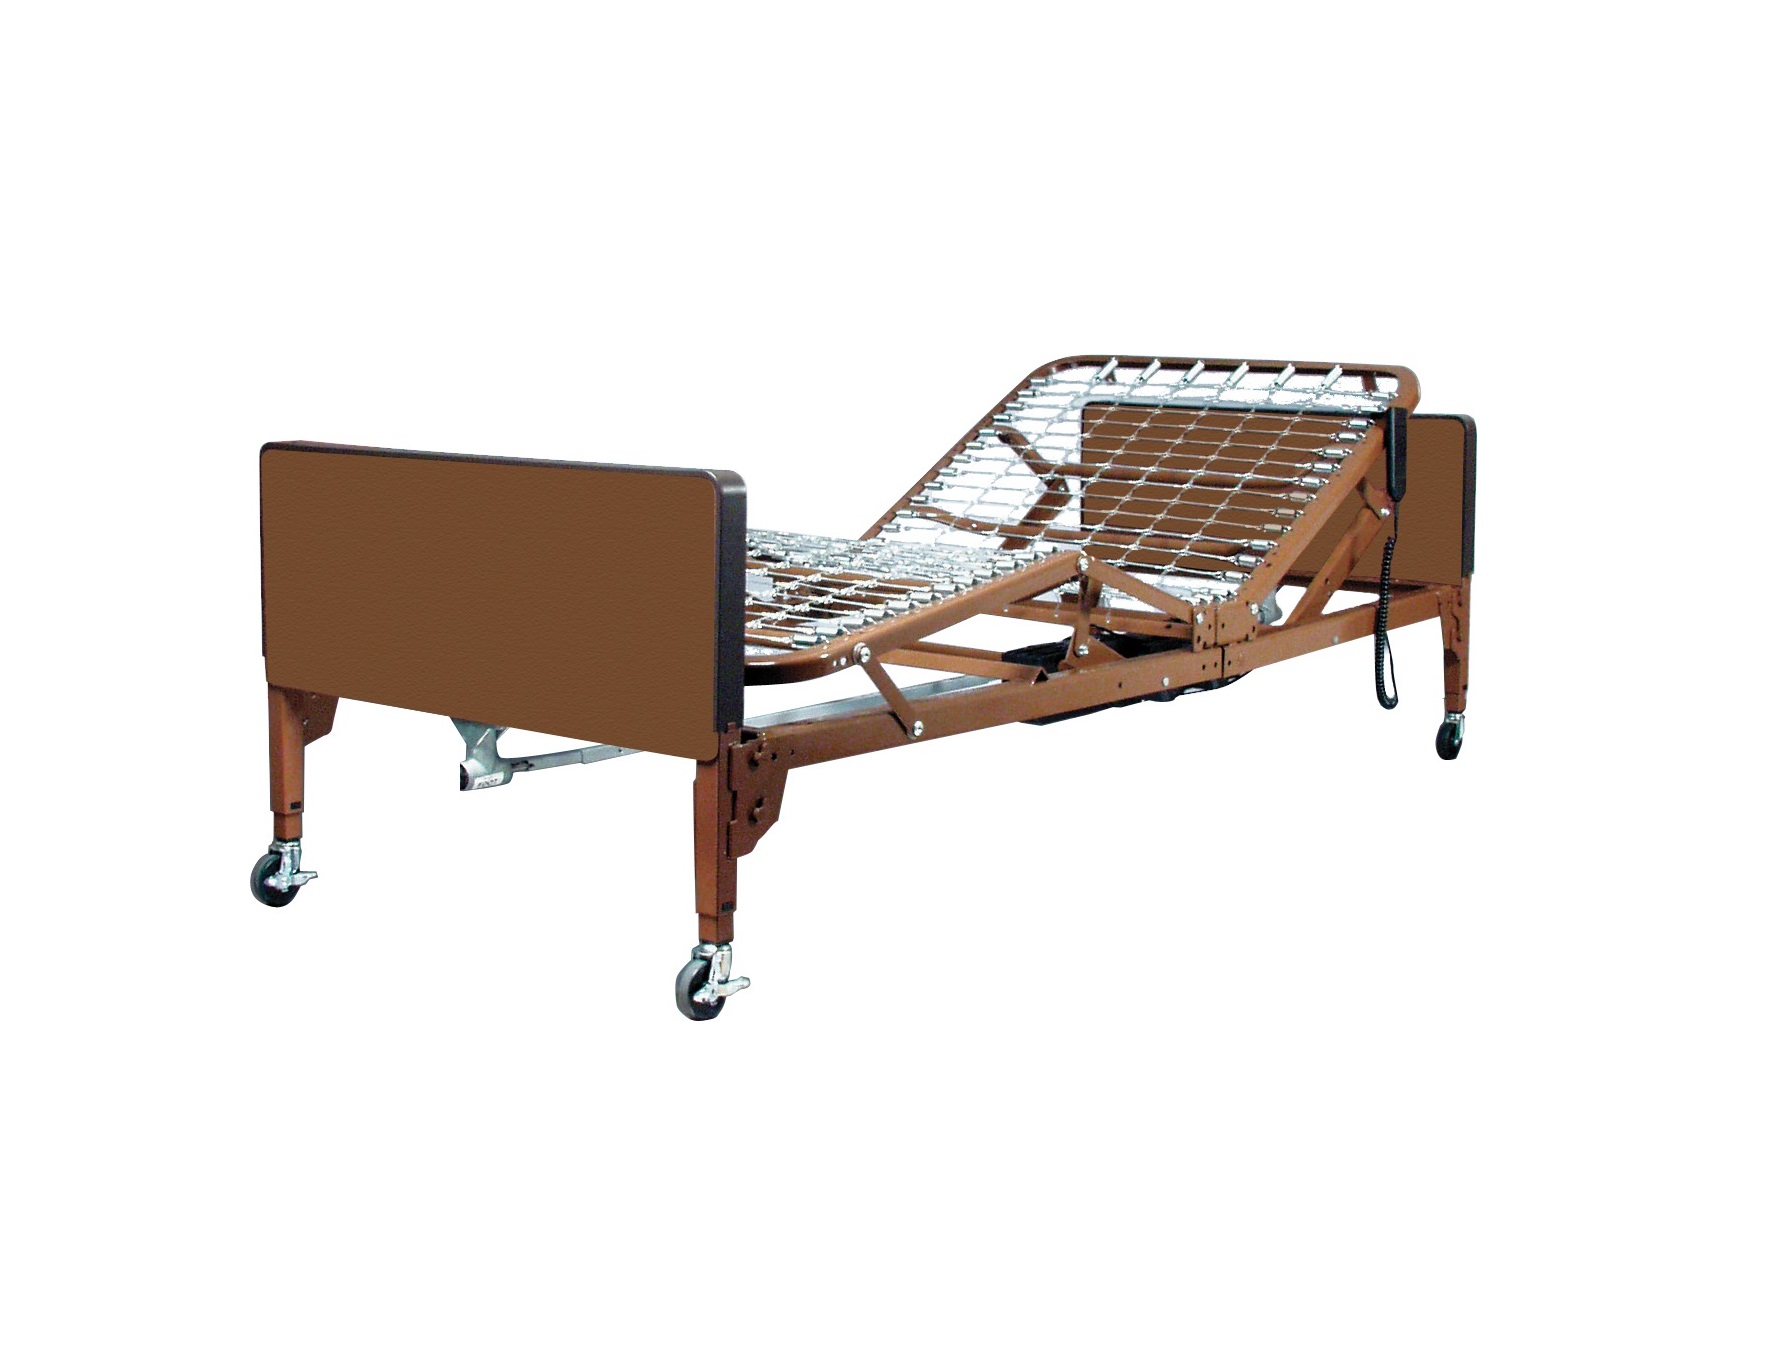 probasics hospital bed mattress